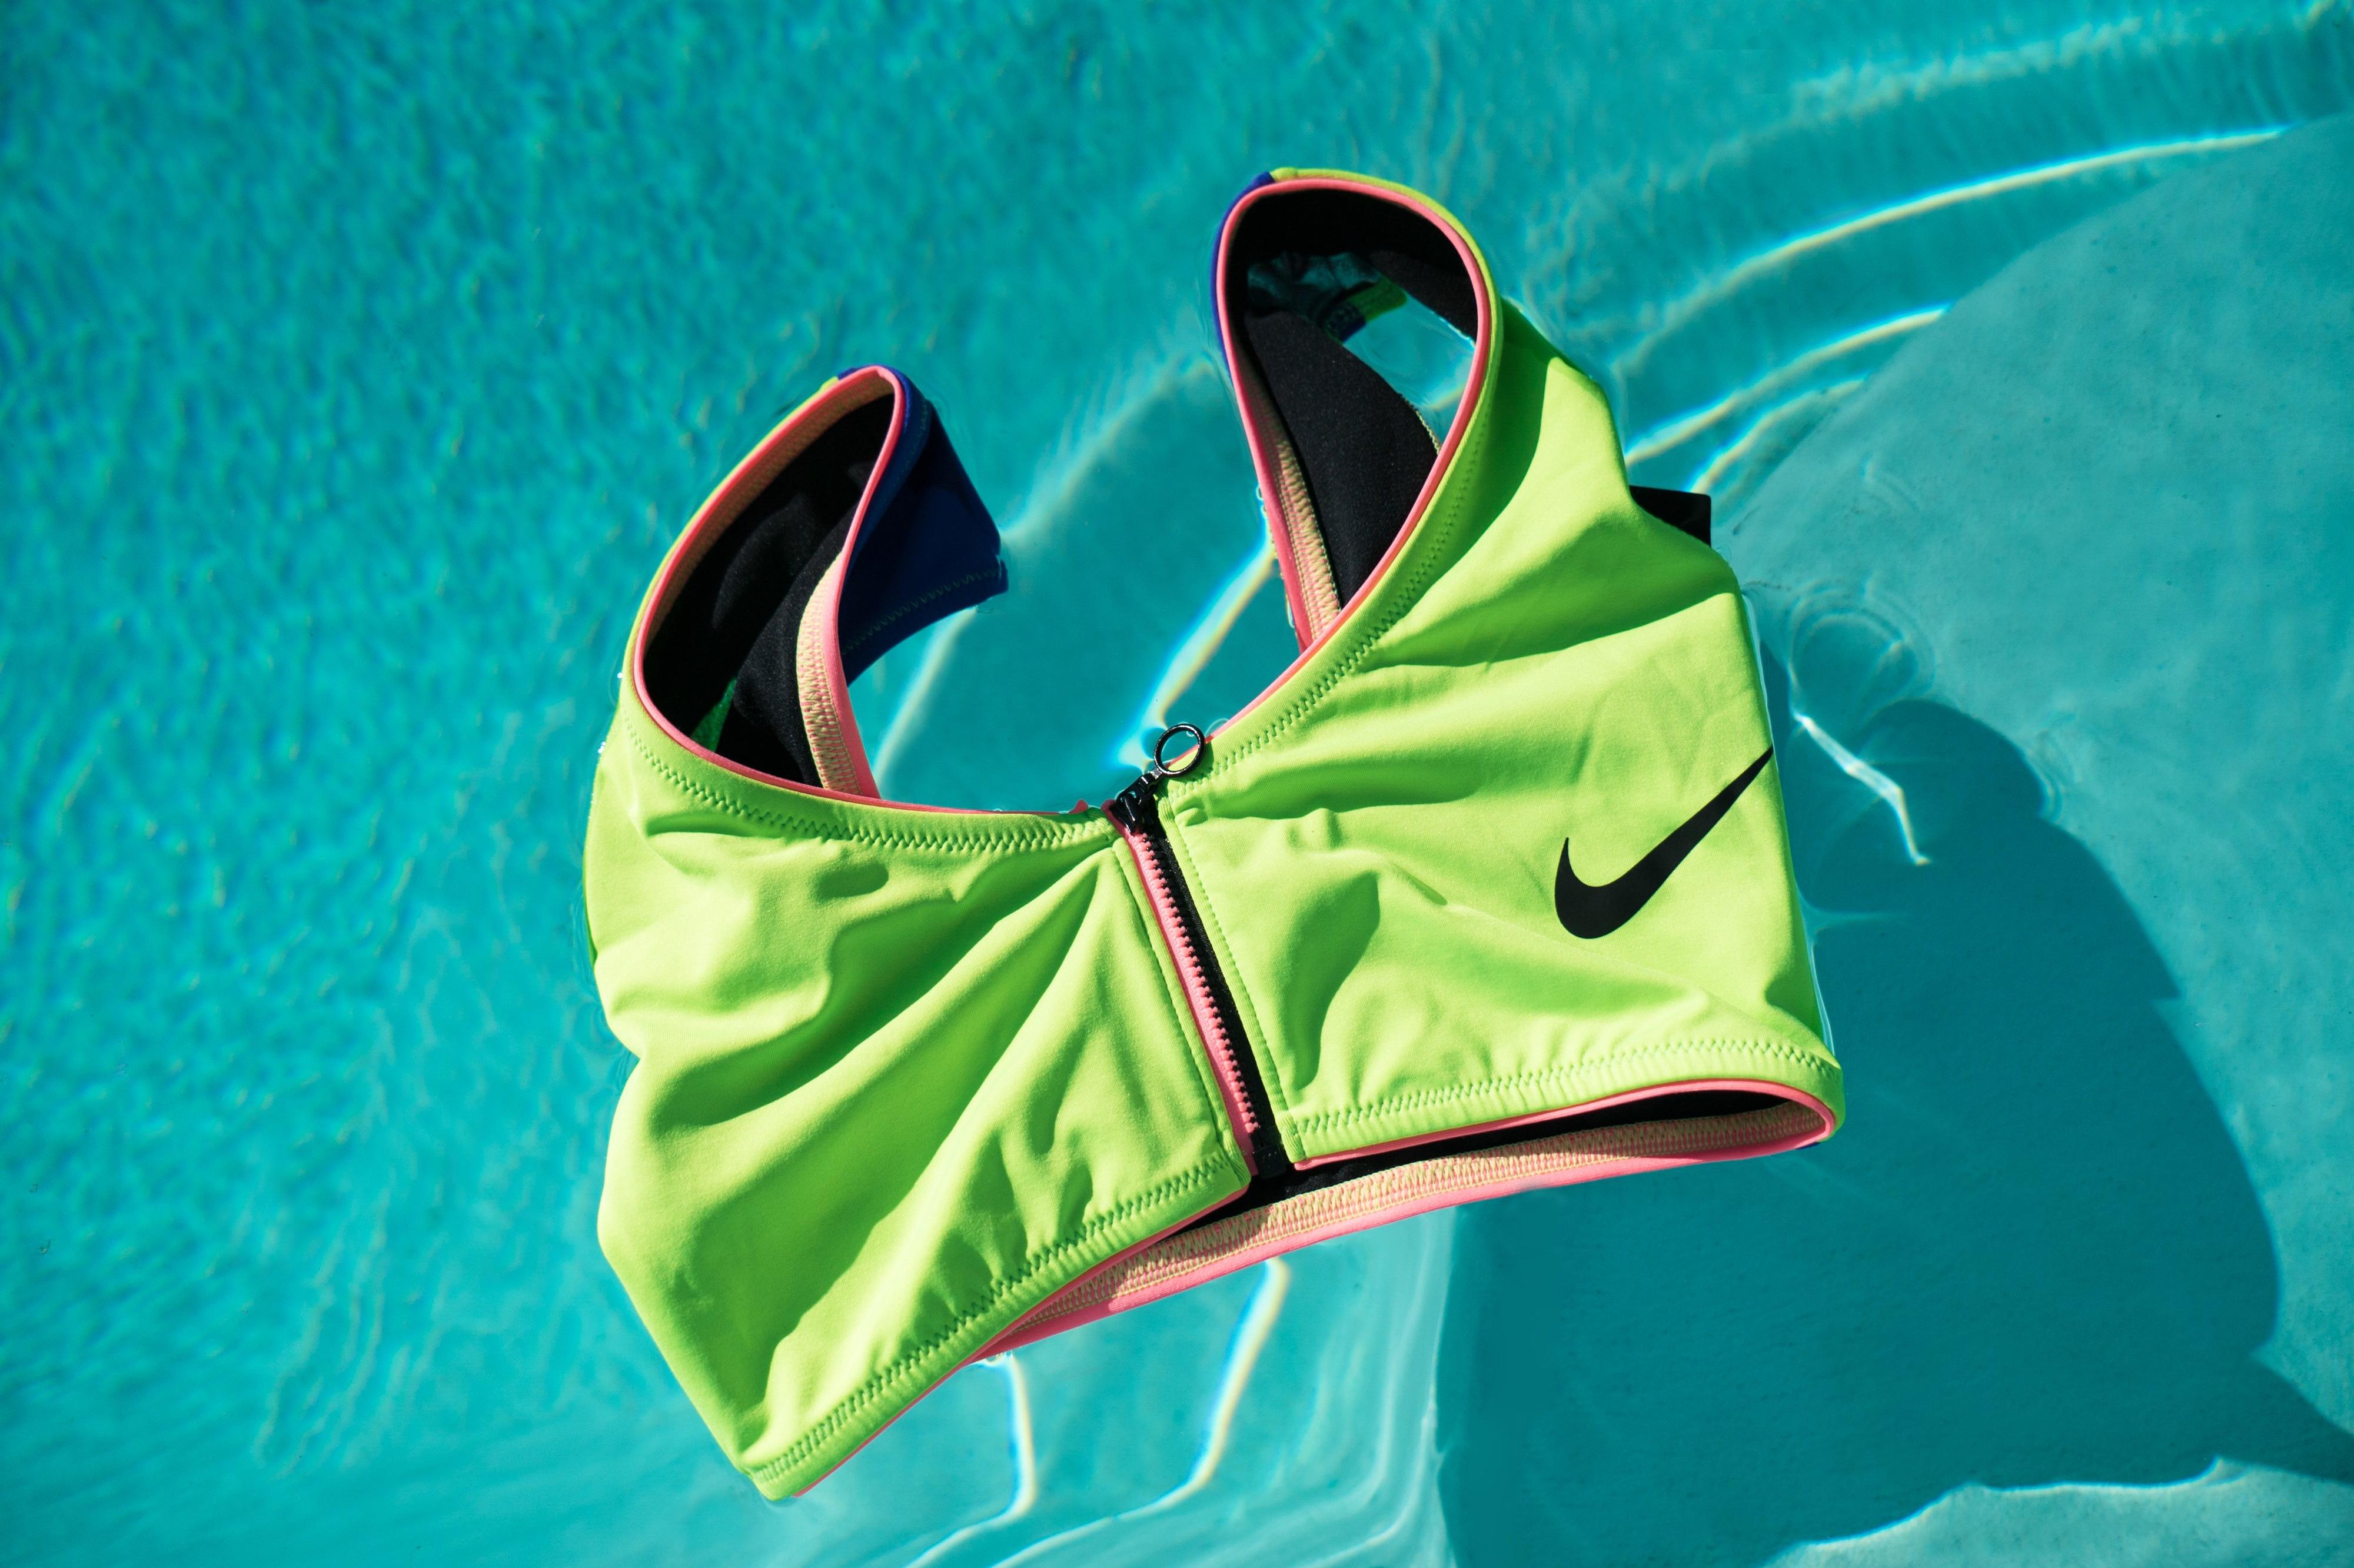 vanidad Encogerse de hombros presumir Make A Splash With These Colorful Nike Swimsuits